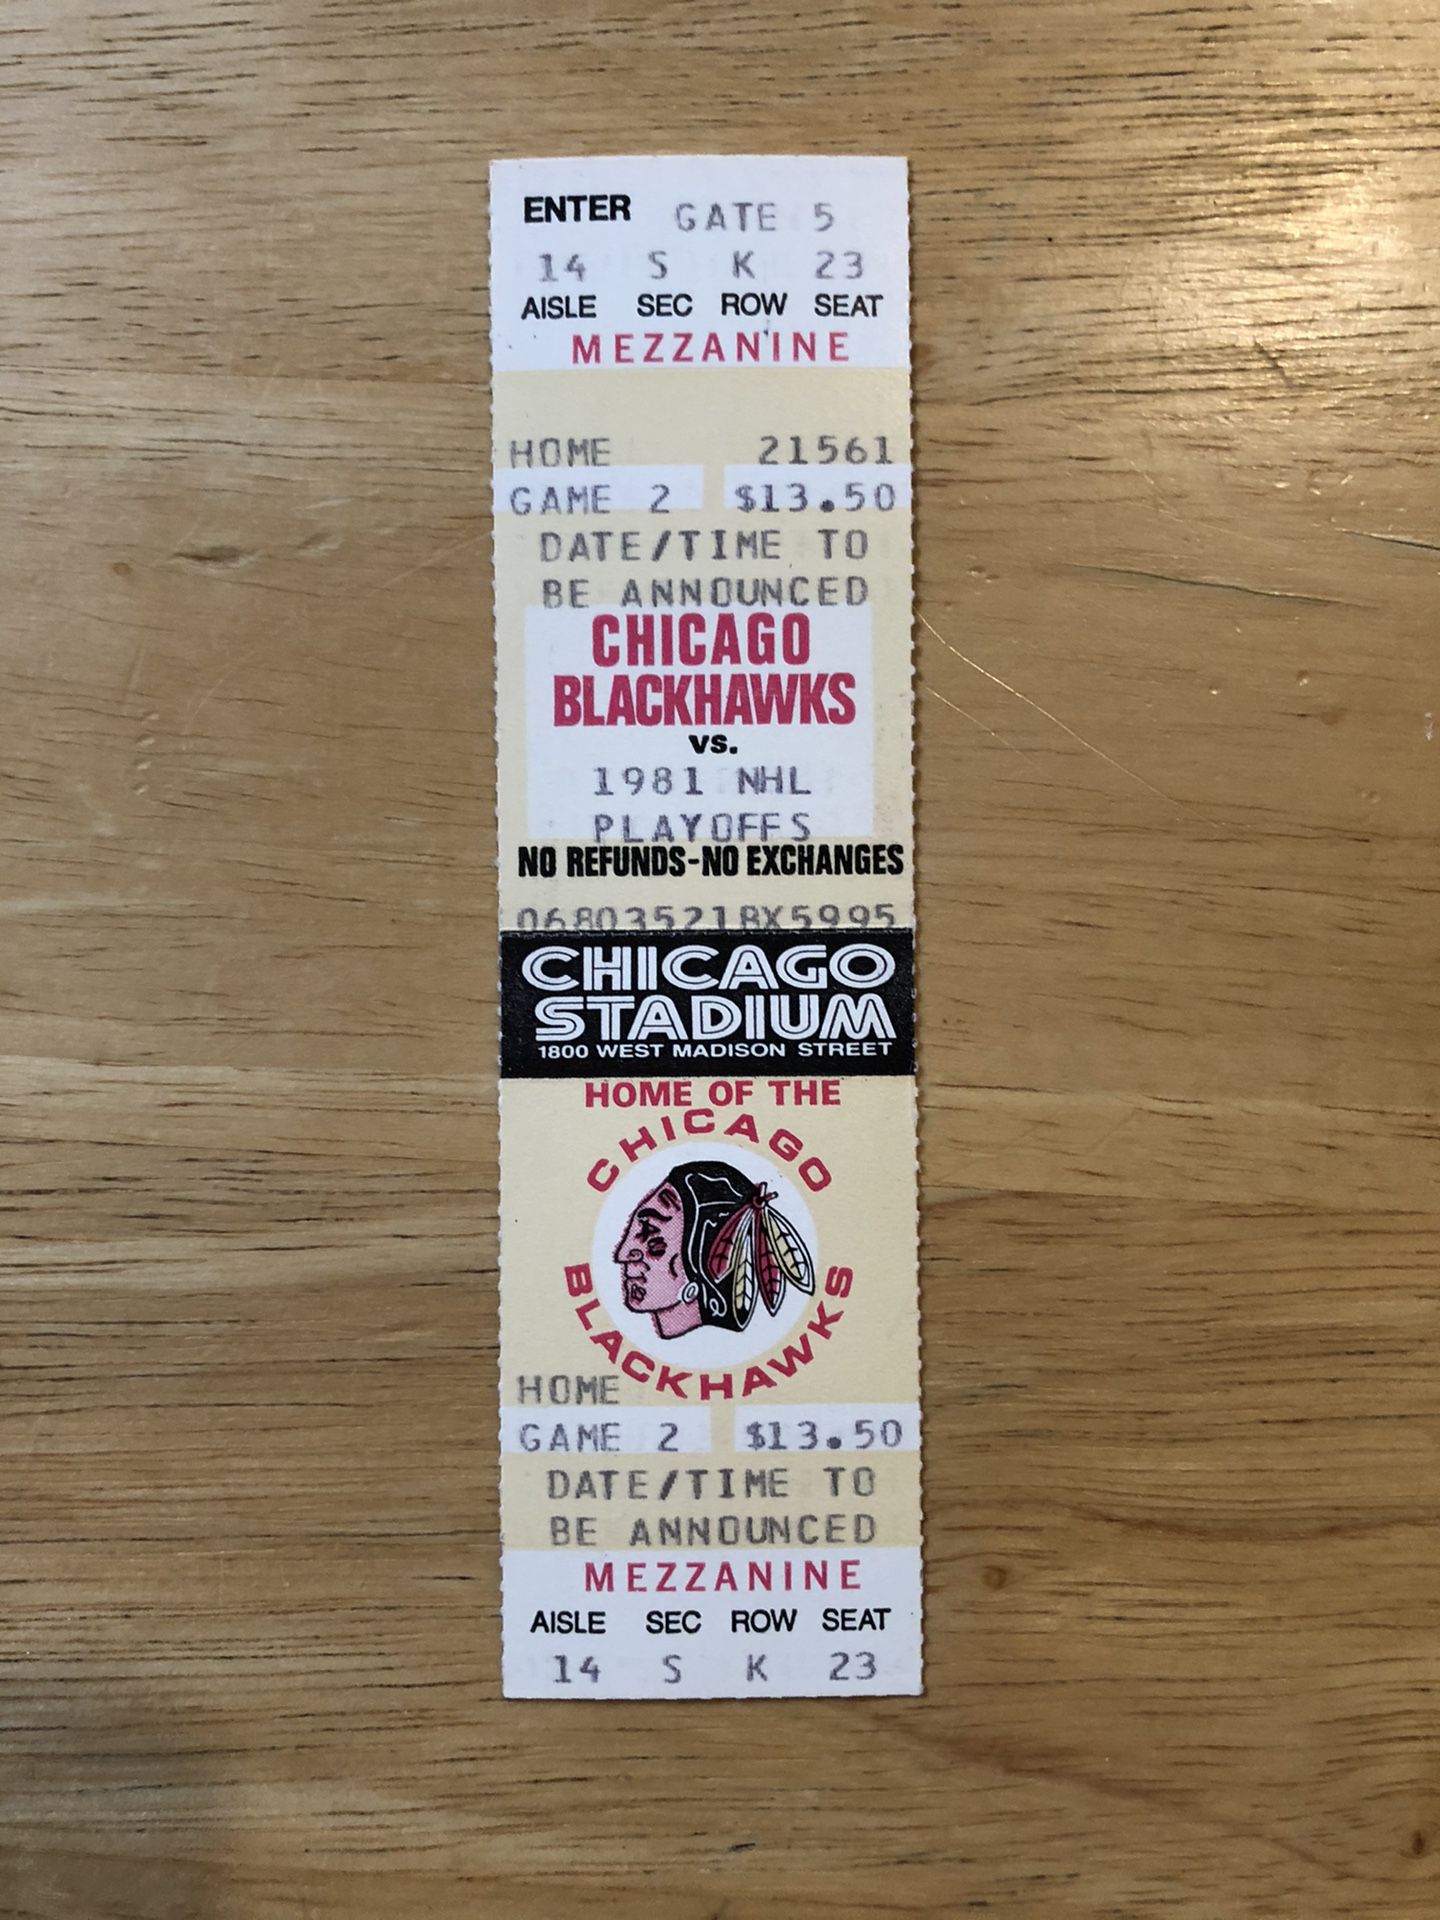 Chicago blackhawks playoff ticket stub from 1980s